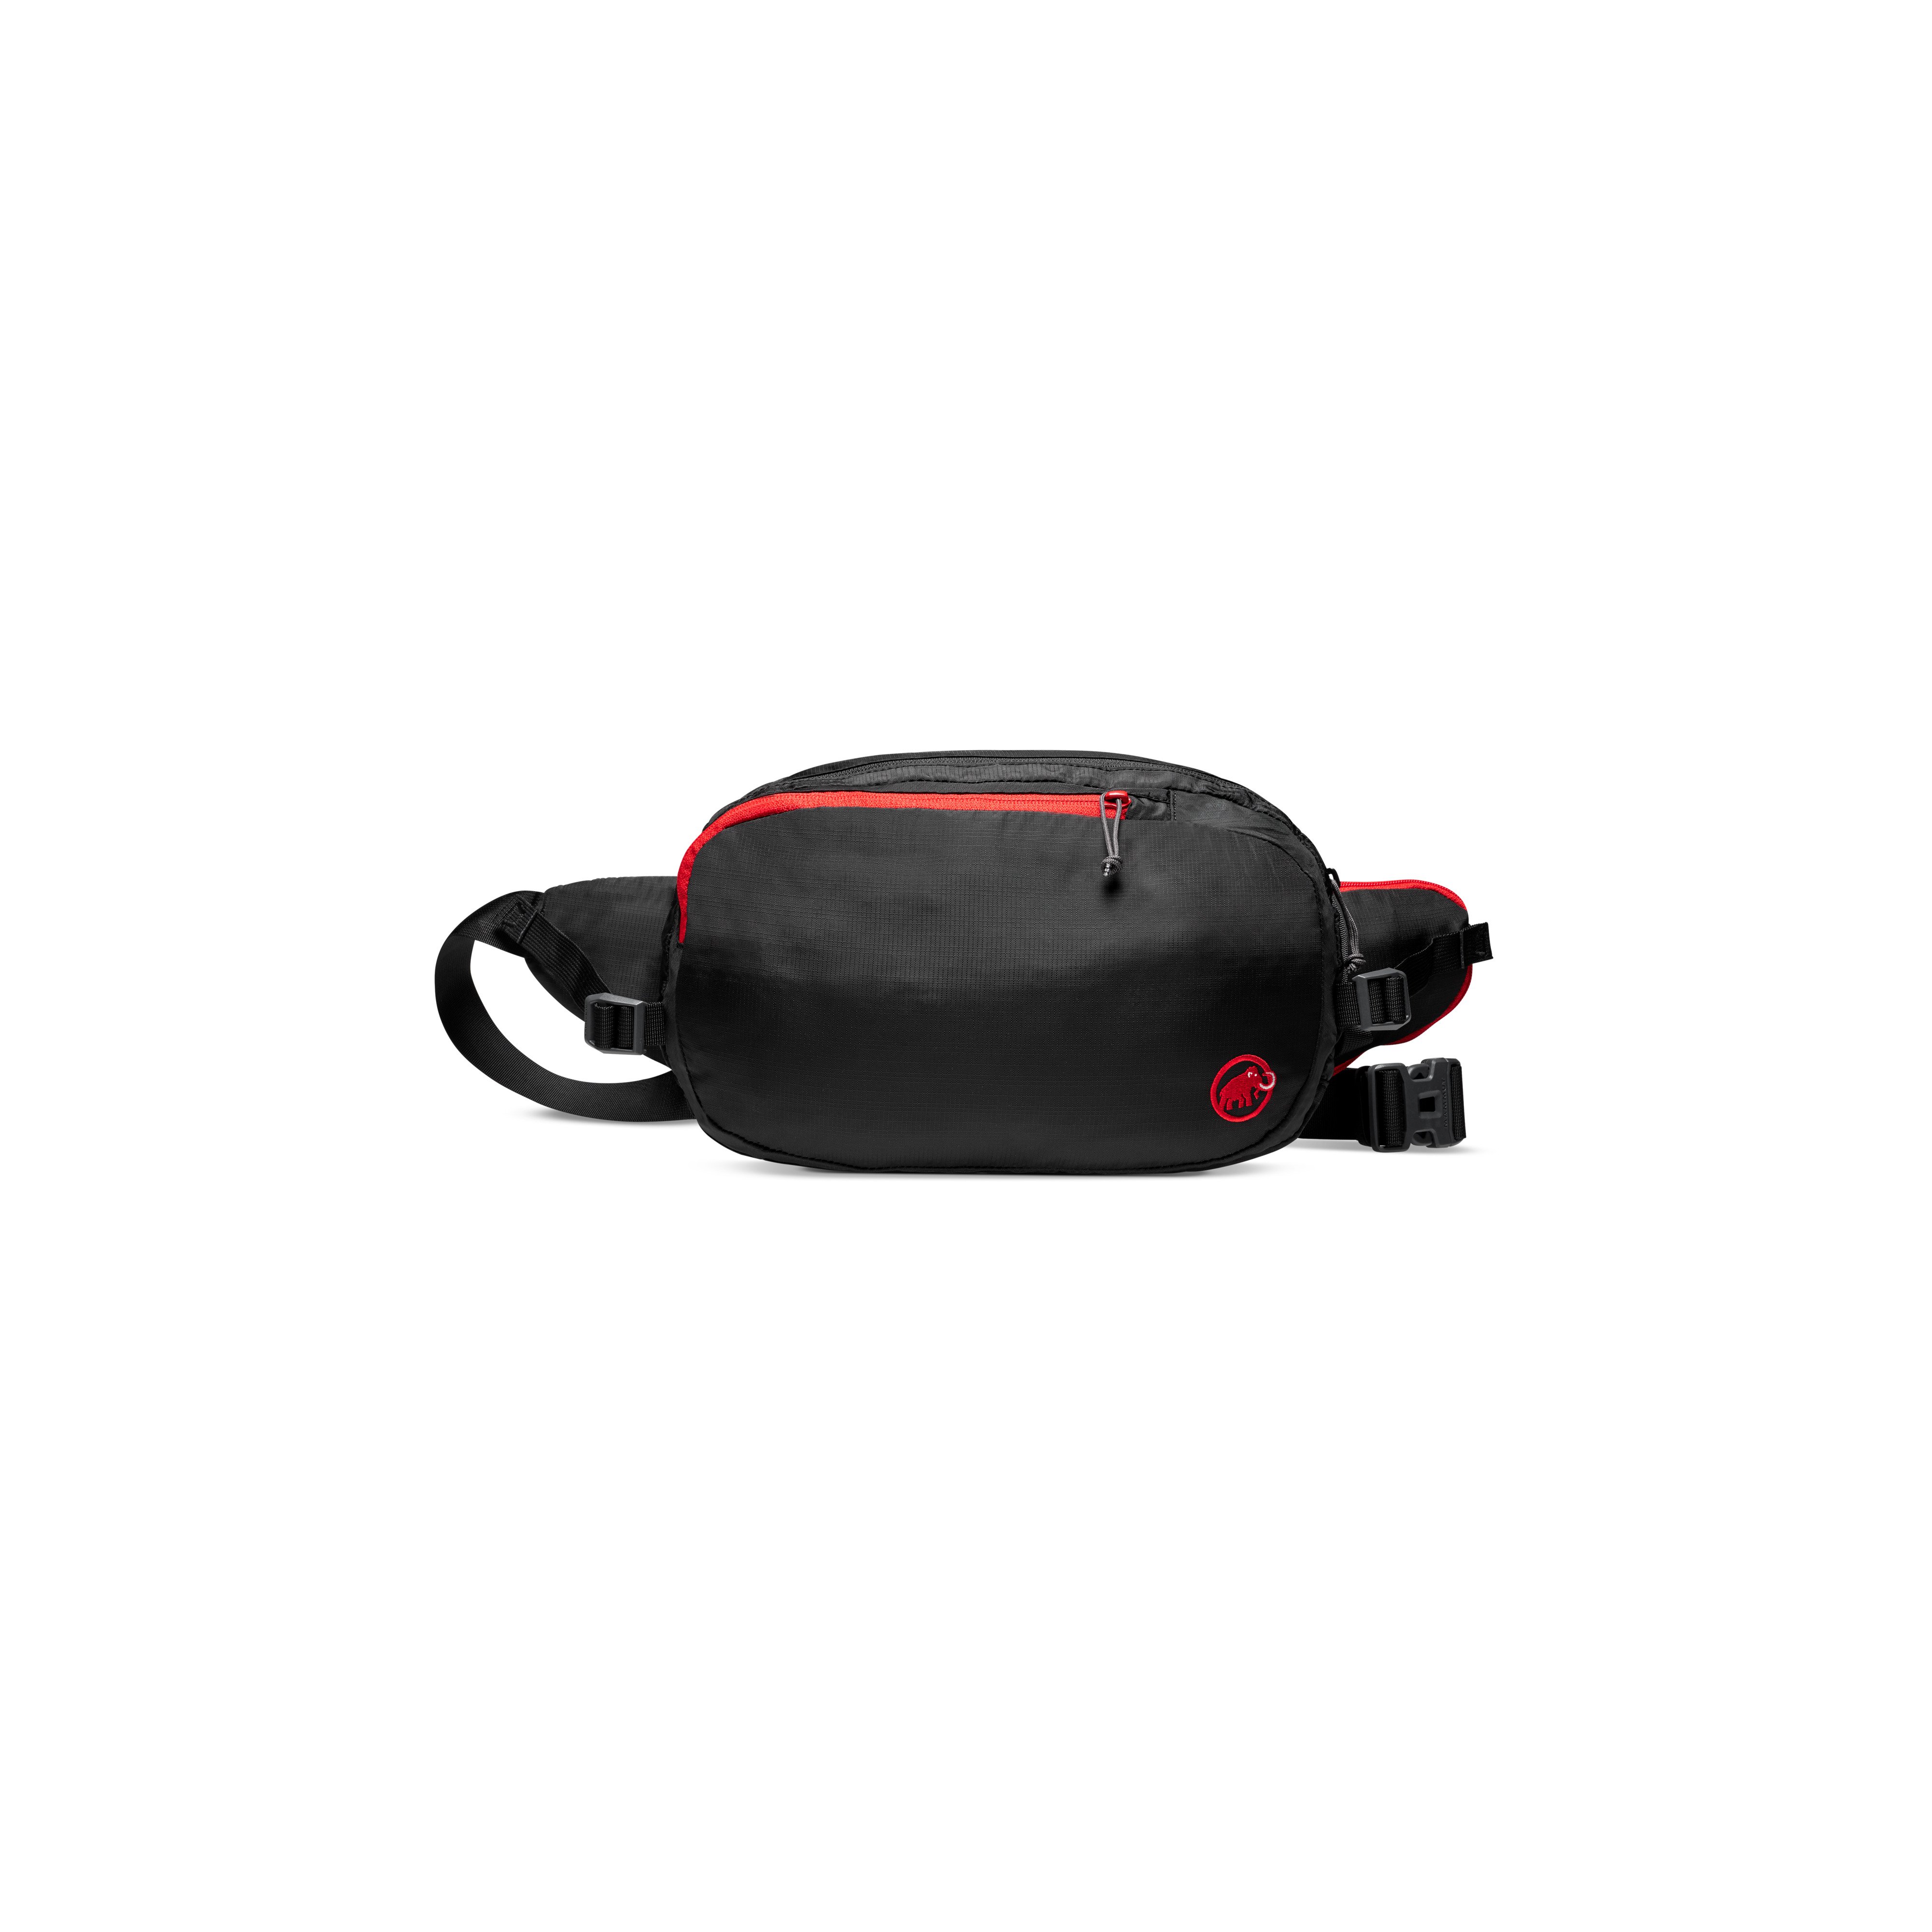 Waistpack Hike - black, 8 L product image